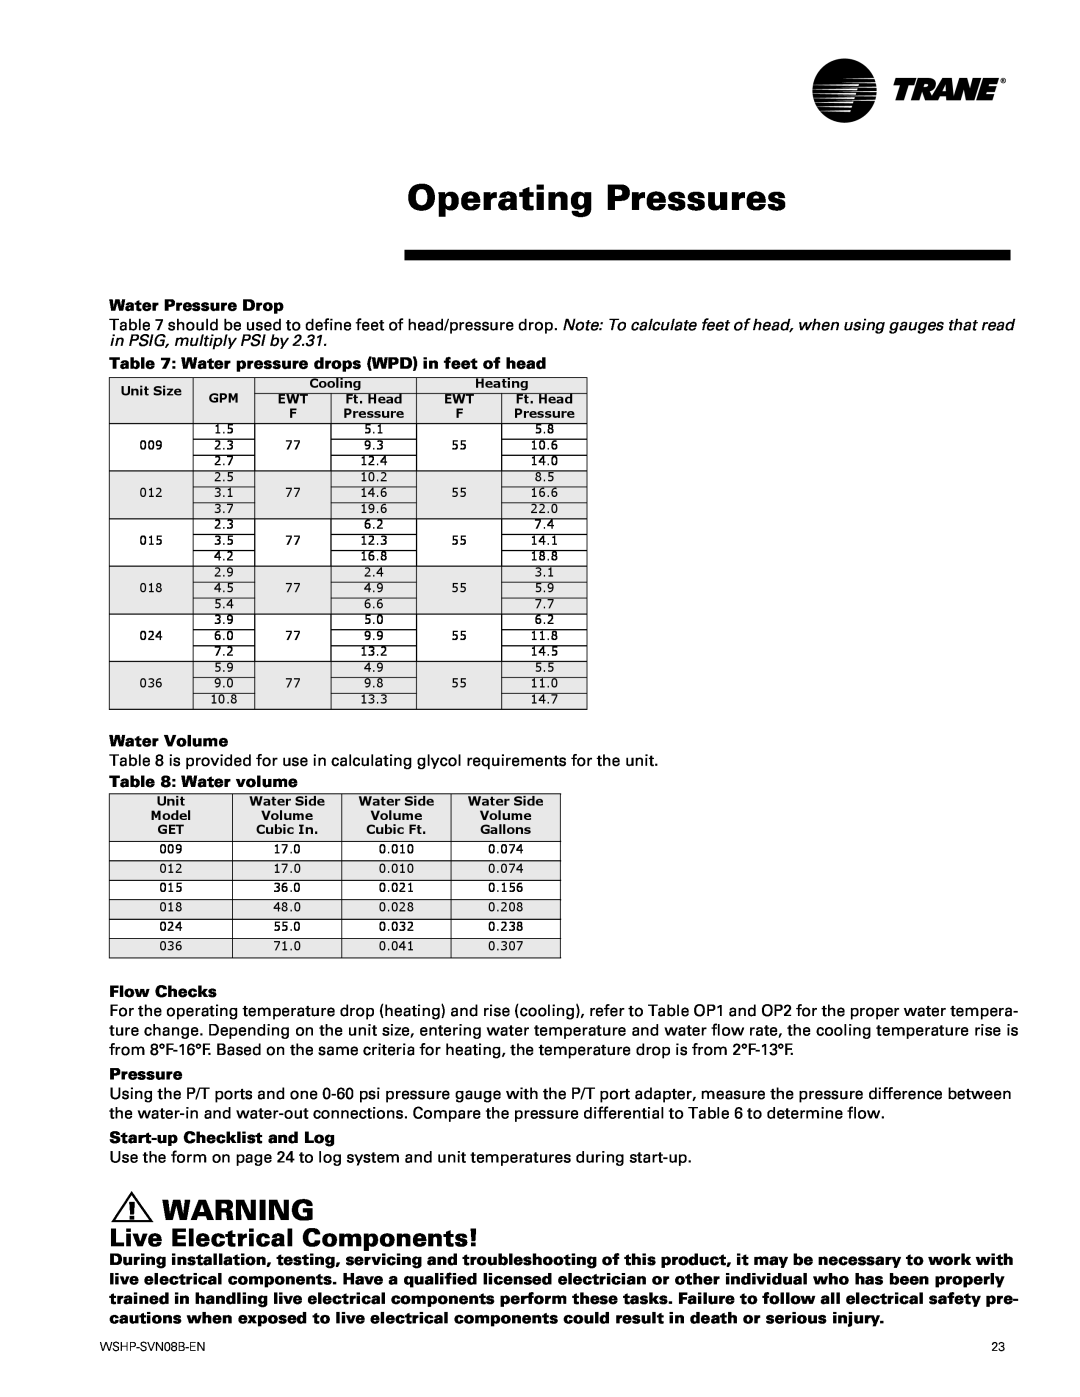 Trane GETB Operating Pressures, Live Electrical Components, Water Pressure Drop, Water pressure drops WPD in feet of head 